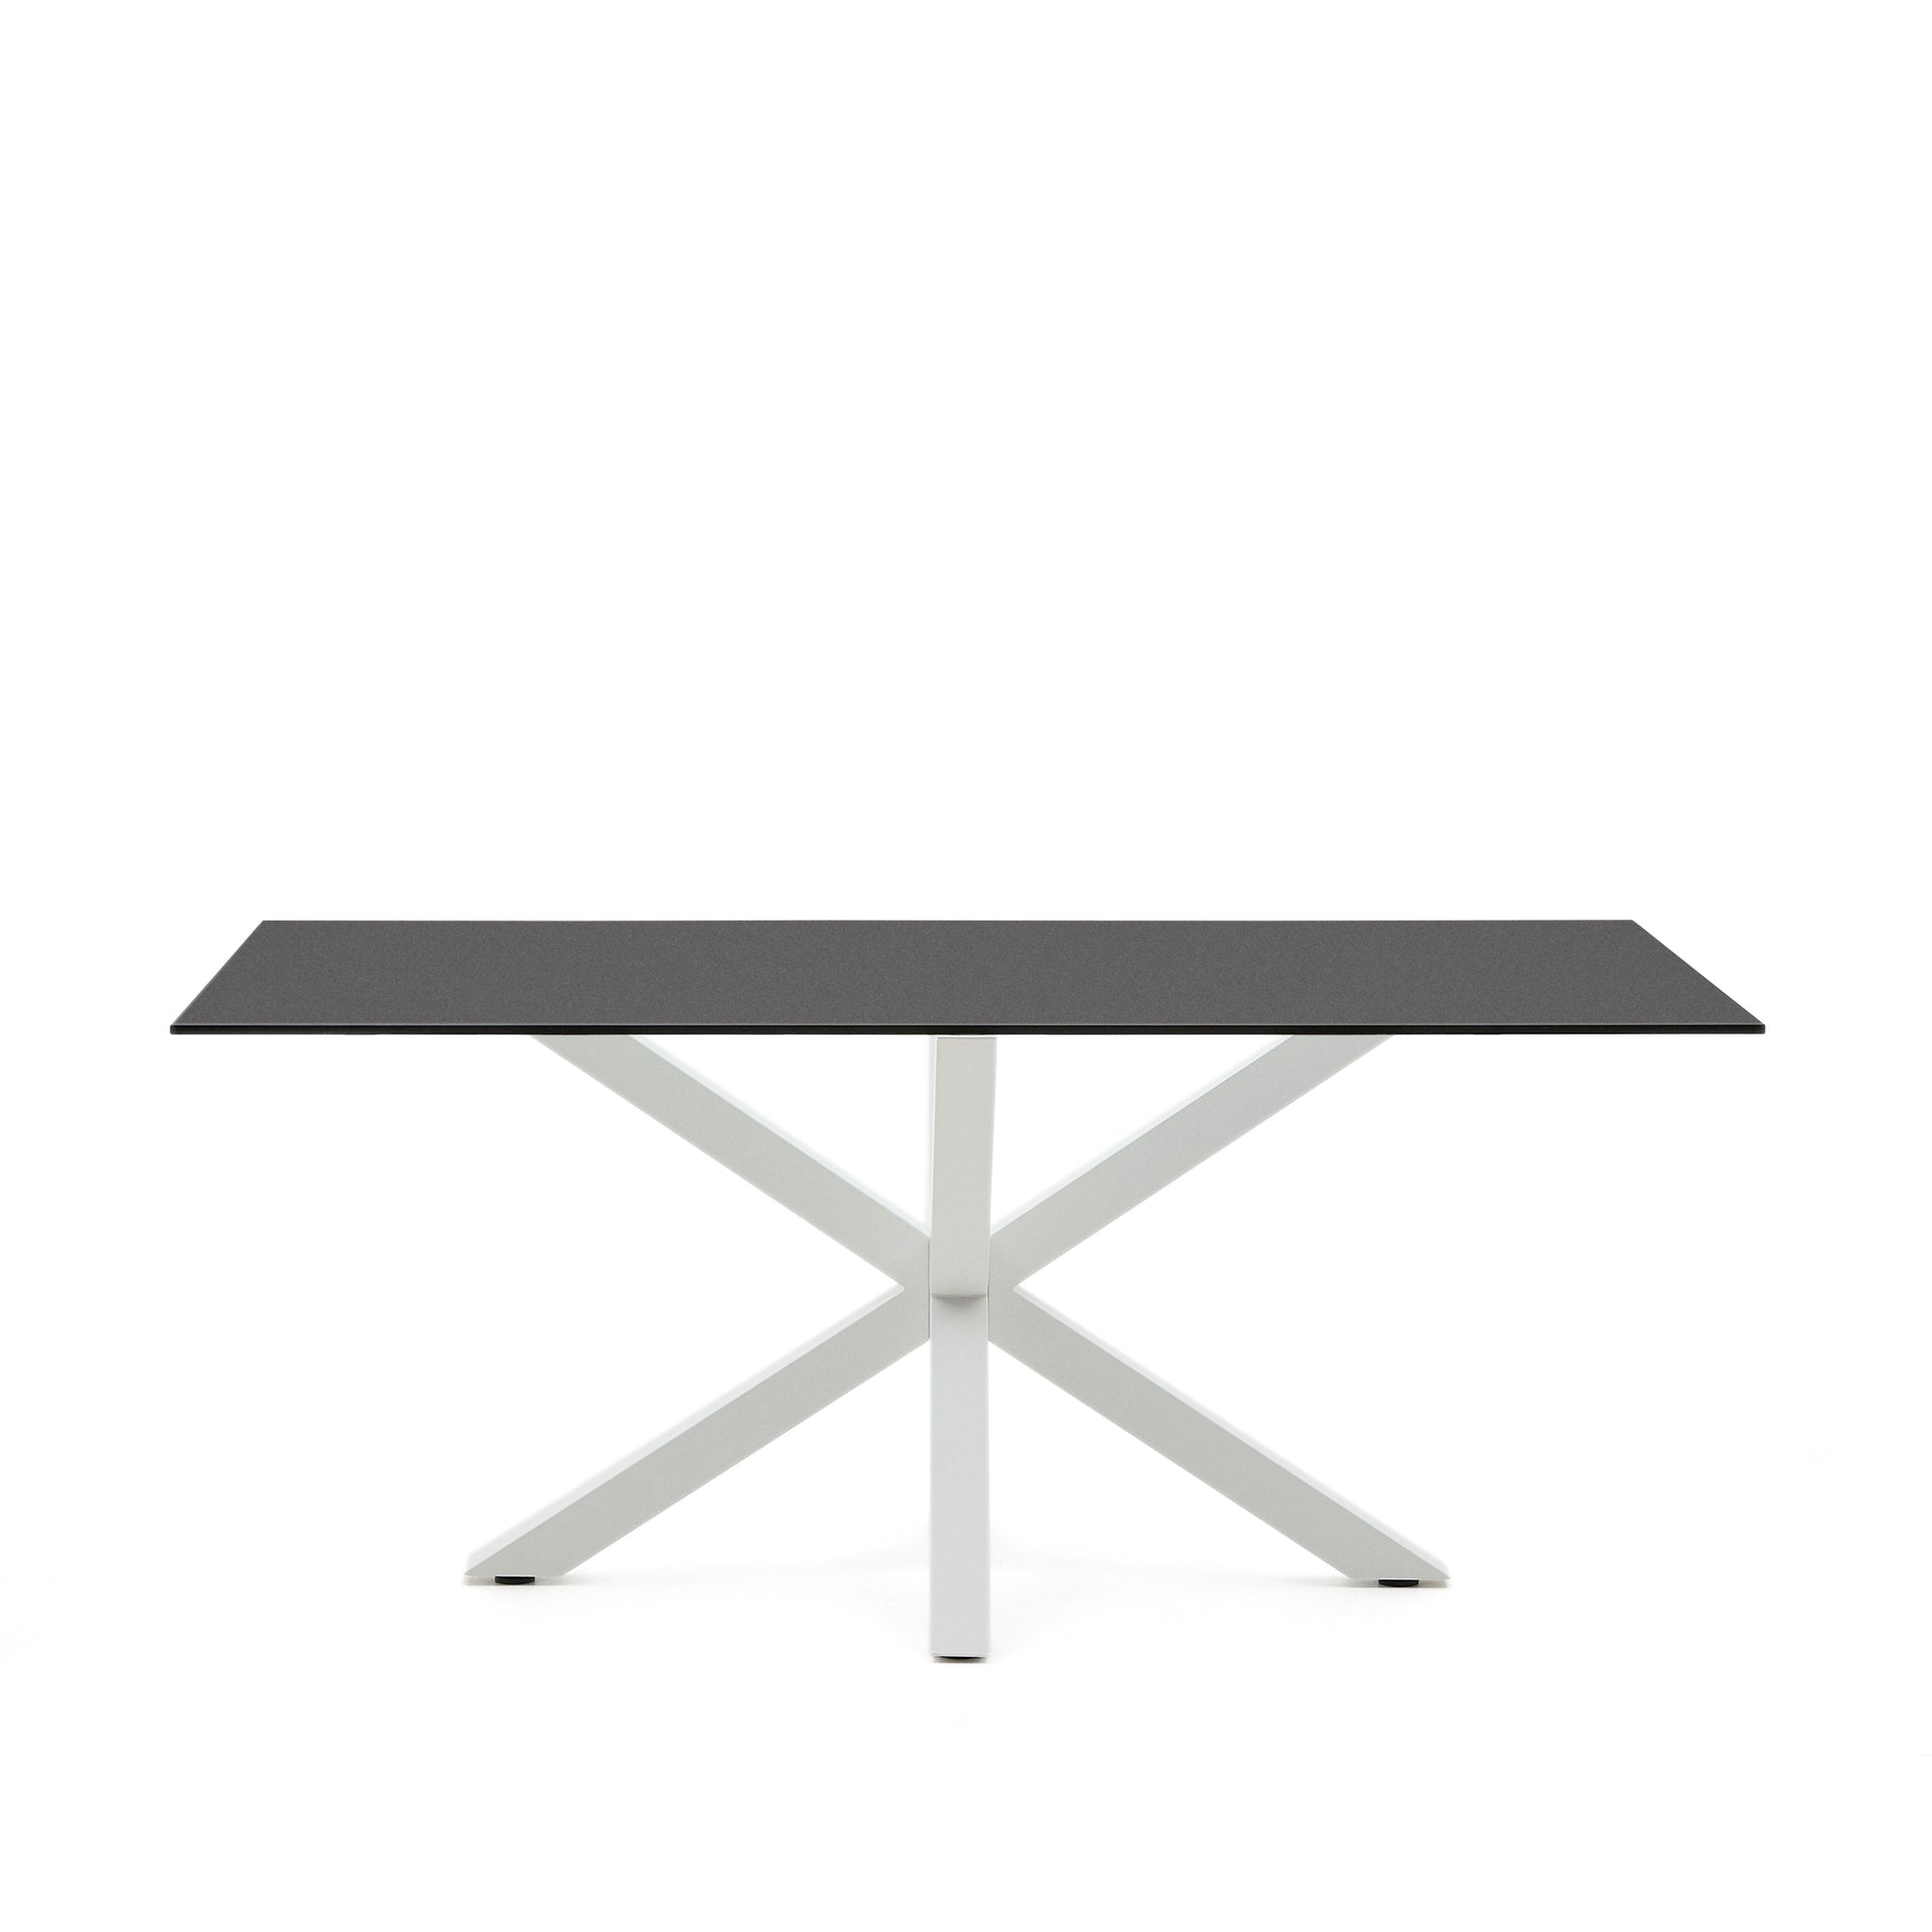 Argo table 180x100 cm, epoxy white and black glass